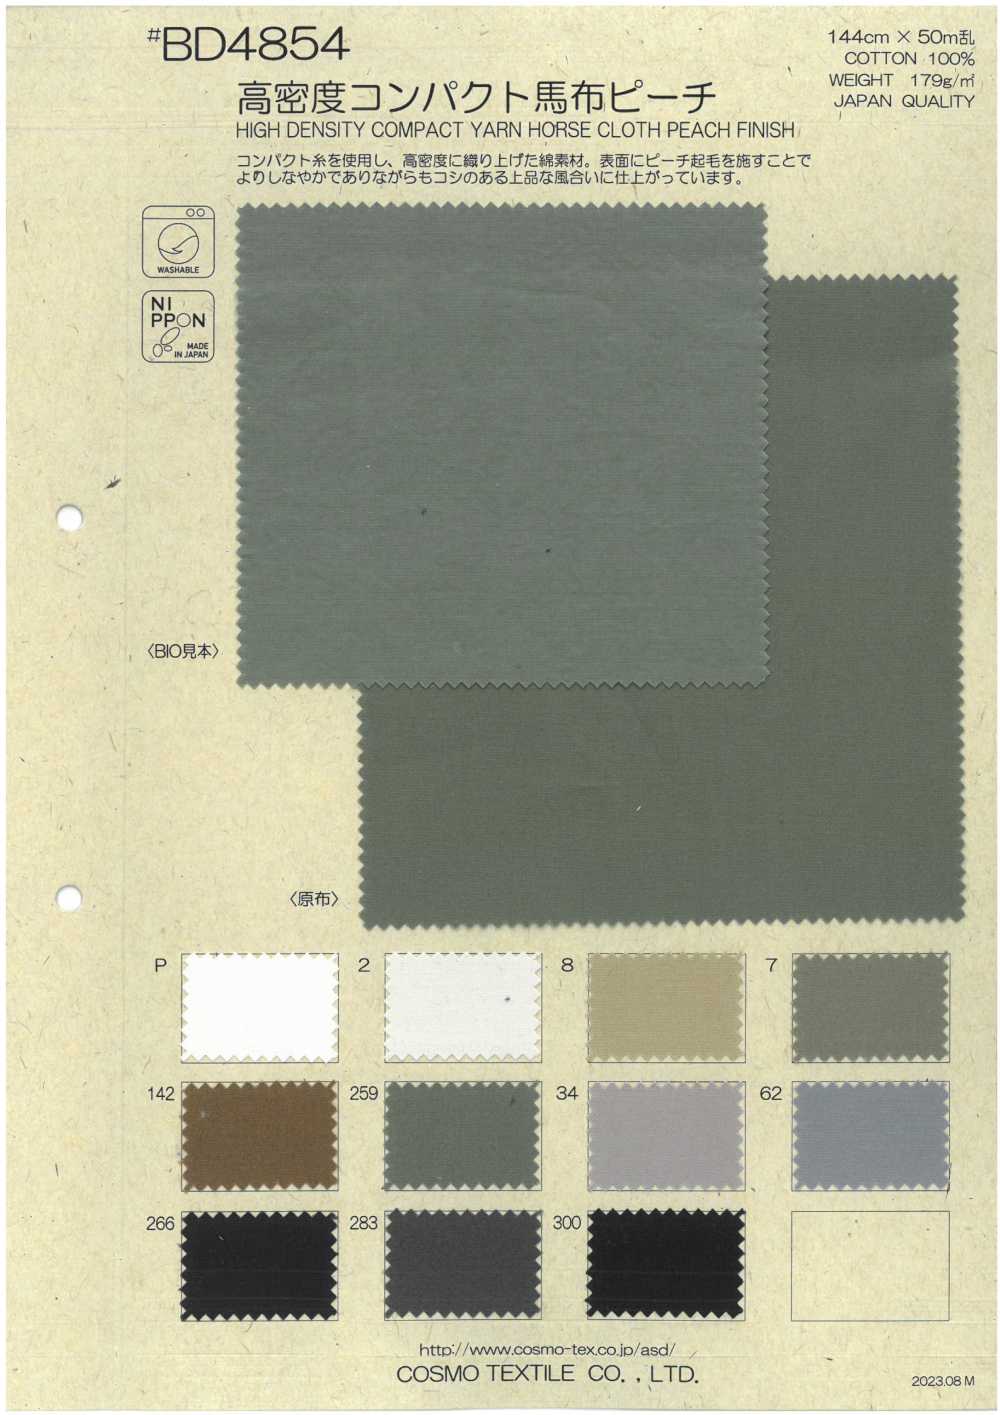 BD4854 High Density Compact High Density Poplin Peach[Textile / Fabric] COSMO TEXTILE